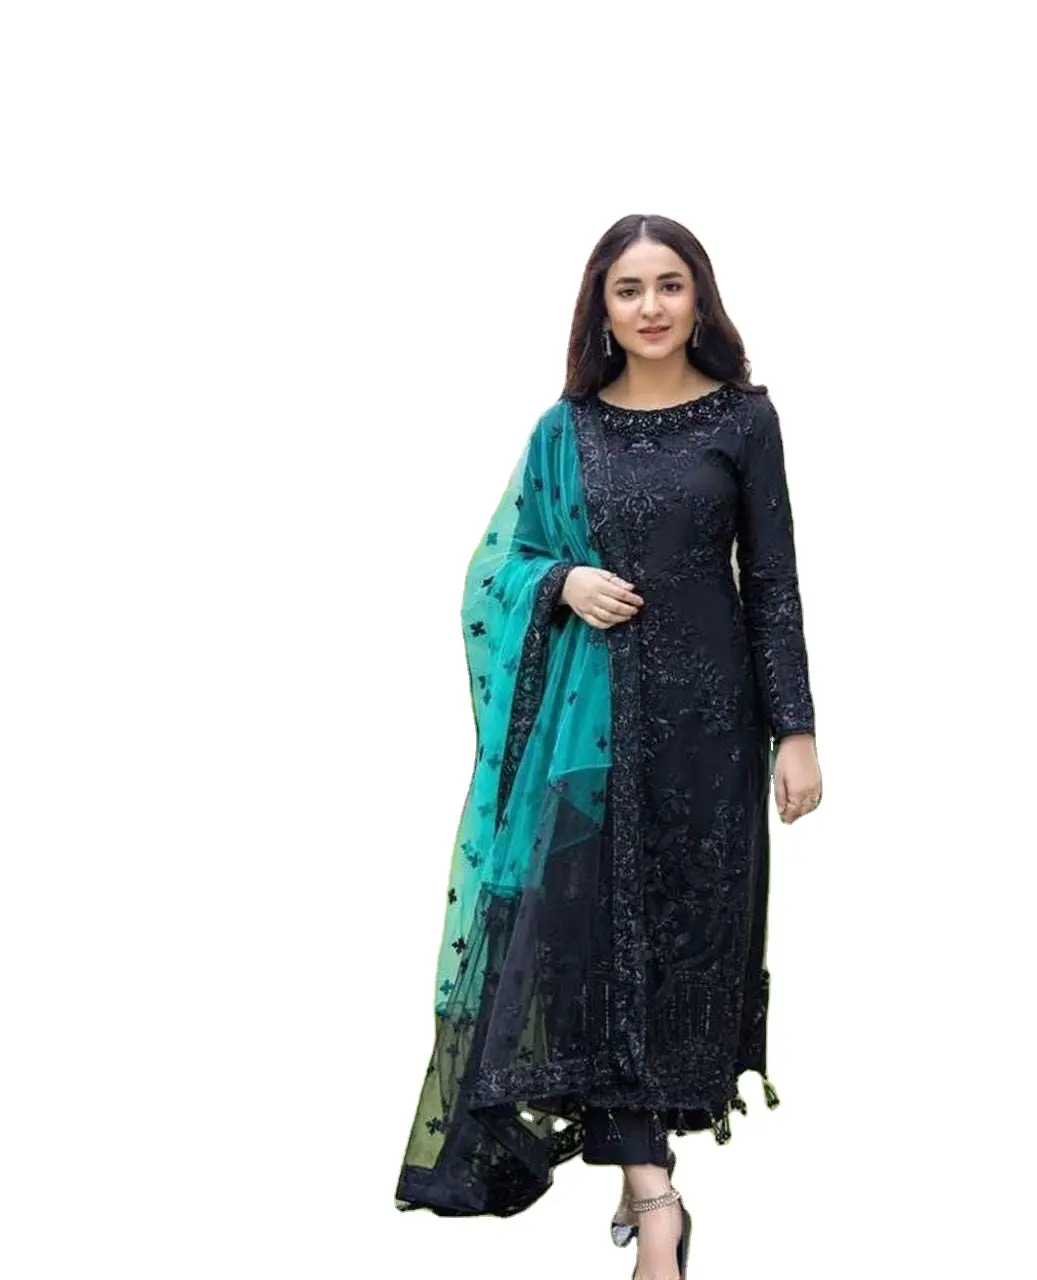 Vestidos de mujer Premium de Pakistán e India. Ropa de fiesta elegante con intrincados bordados.